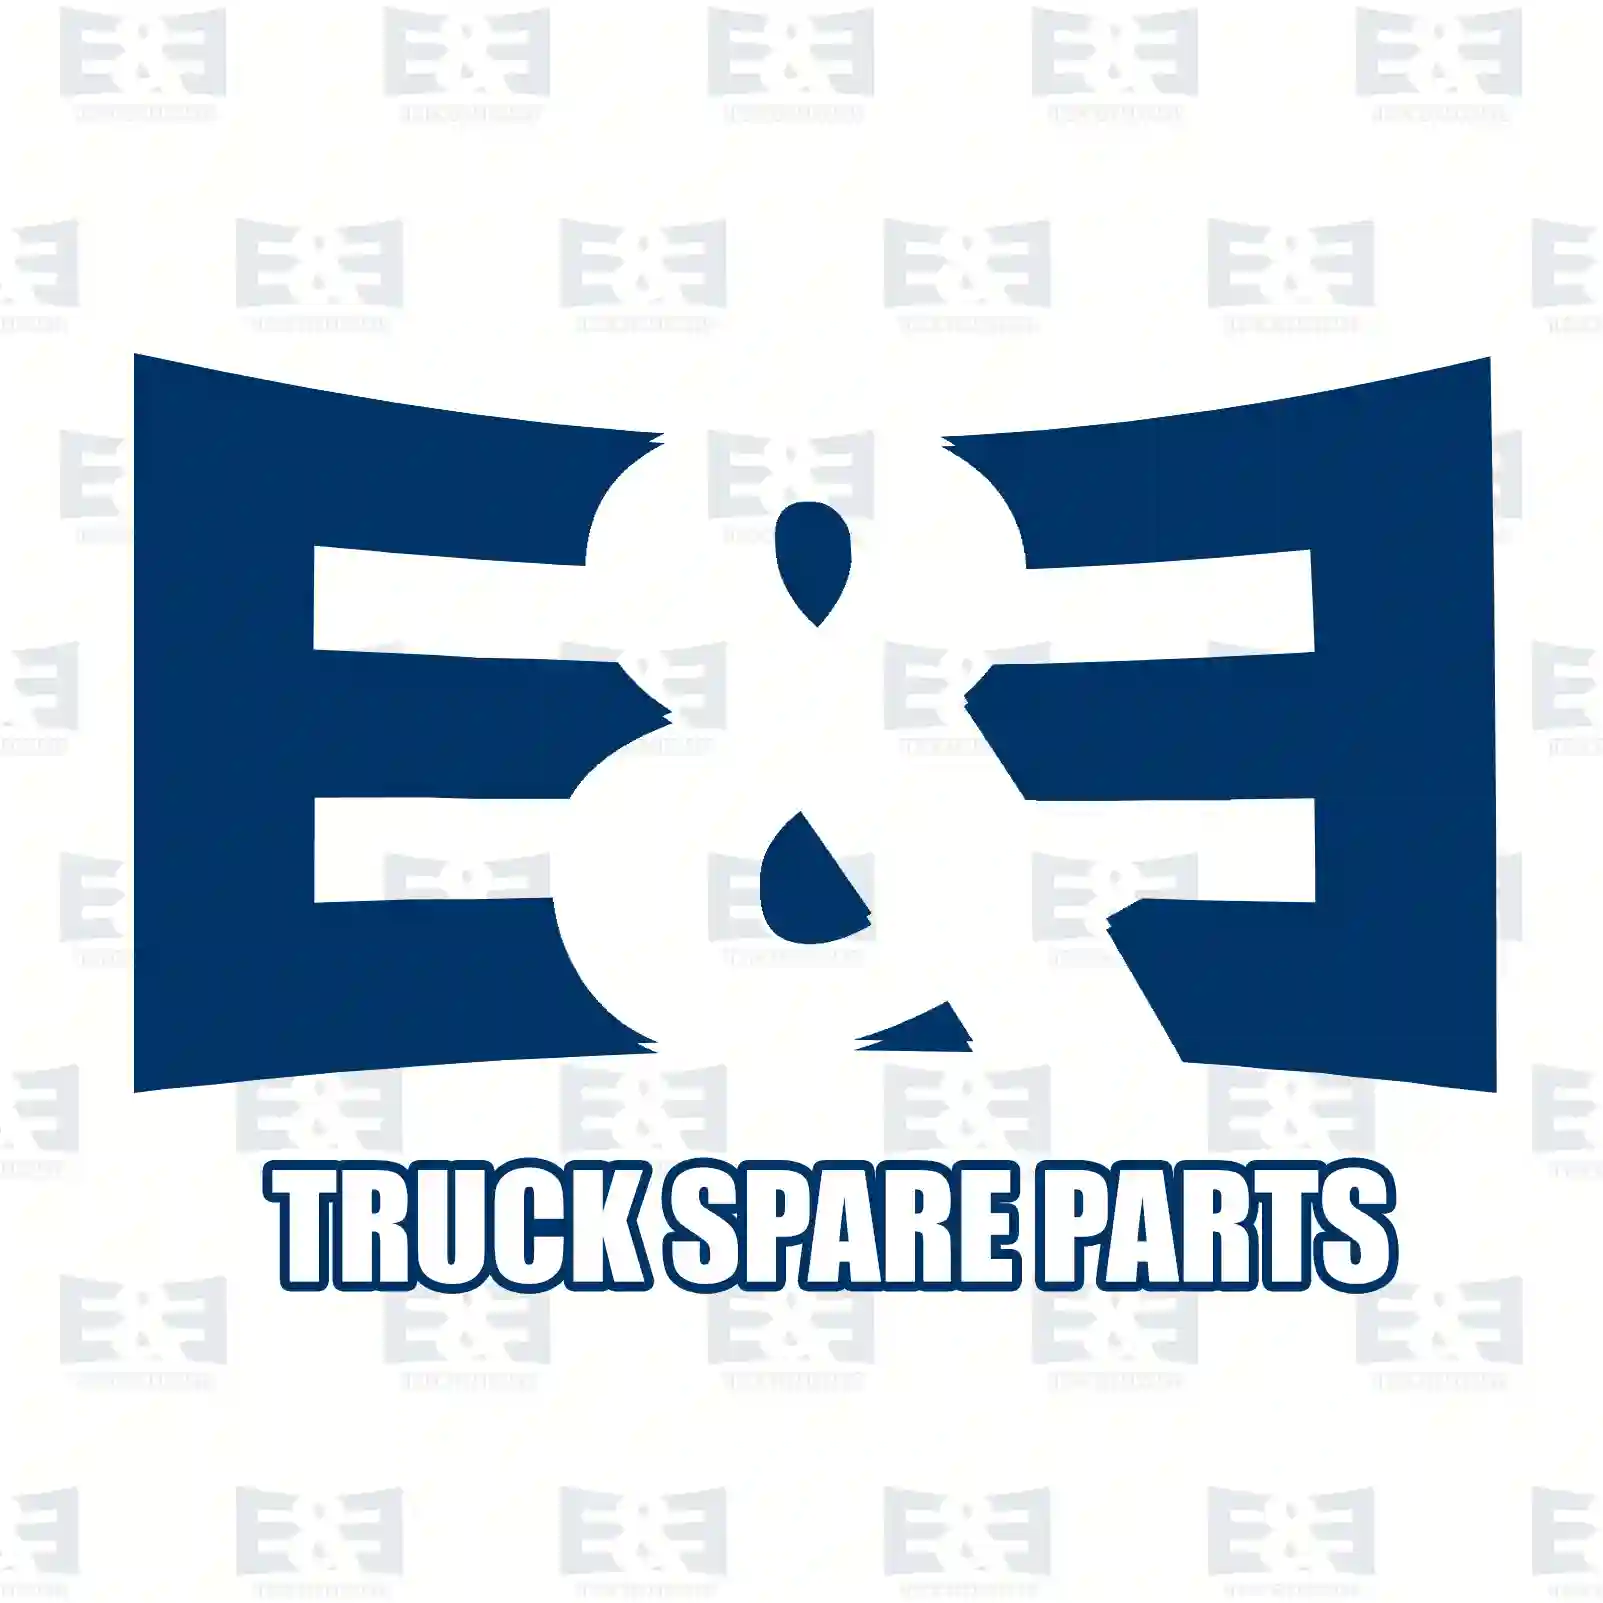 Ball joint, right hand thread, 2E2278298, 0009965245, 6732680189, , ||  2E2278298 E&E Truck Spare Parts | Truck Spare Parts, Auotomotive Spare Parts Ball joint, right hand thread, 2E2278298, 0009965245, 6732680189, , ||  2E2278298 E&E Truck Spare Parts | Truck Spare Parts, Auotomotive Spare Parts